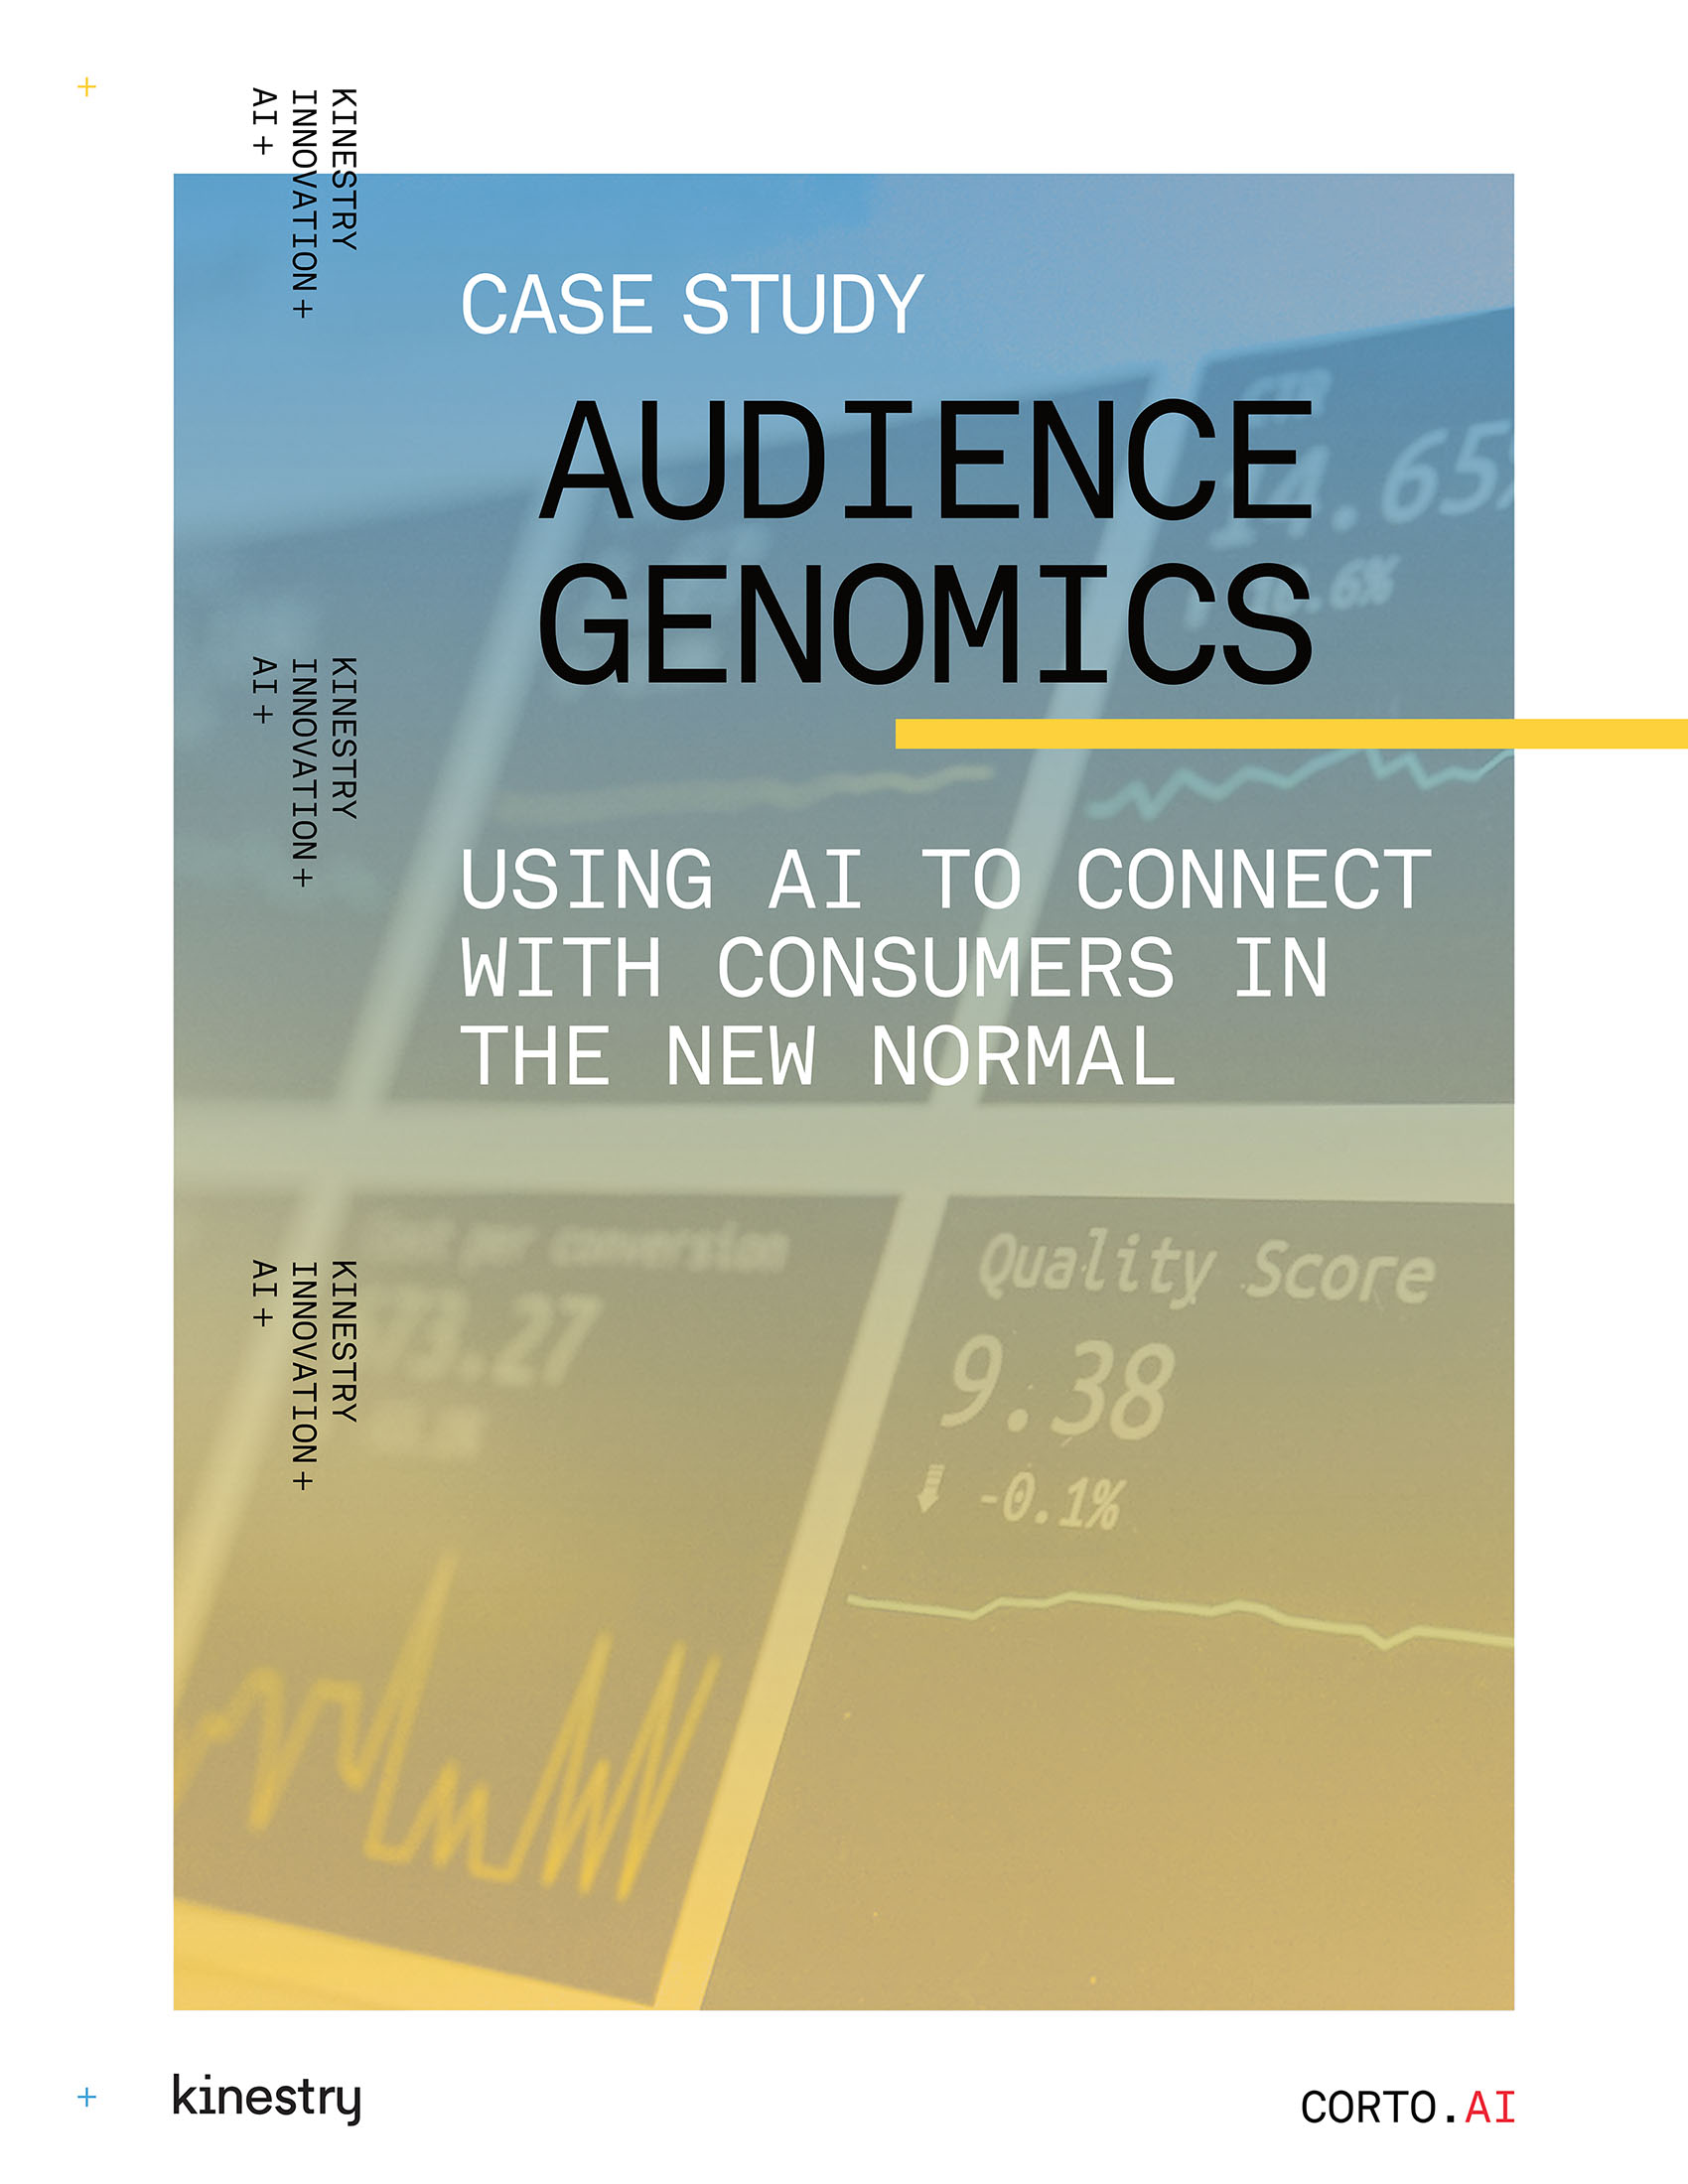 Audience Genomics